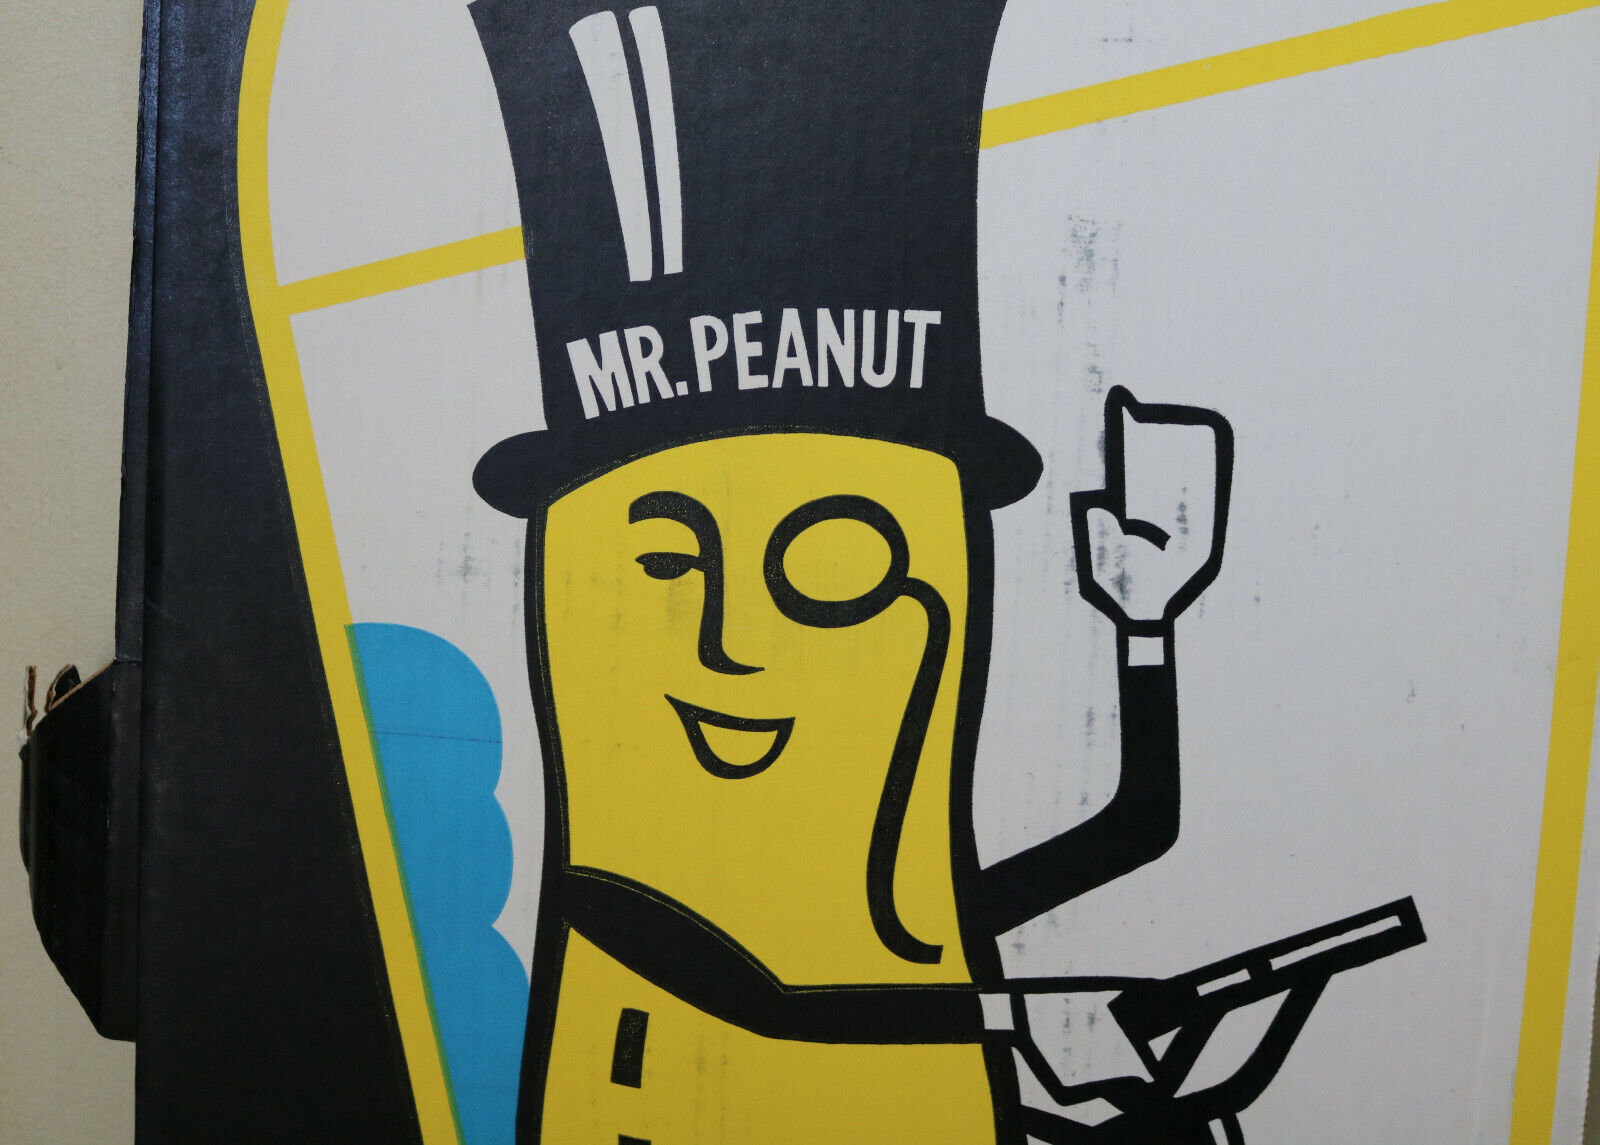 Planters Peanuts Mr. Peanut Pick-Up Truck Store advertising Display Unit